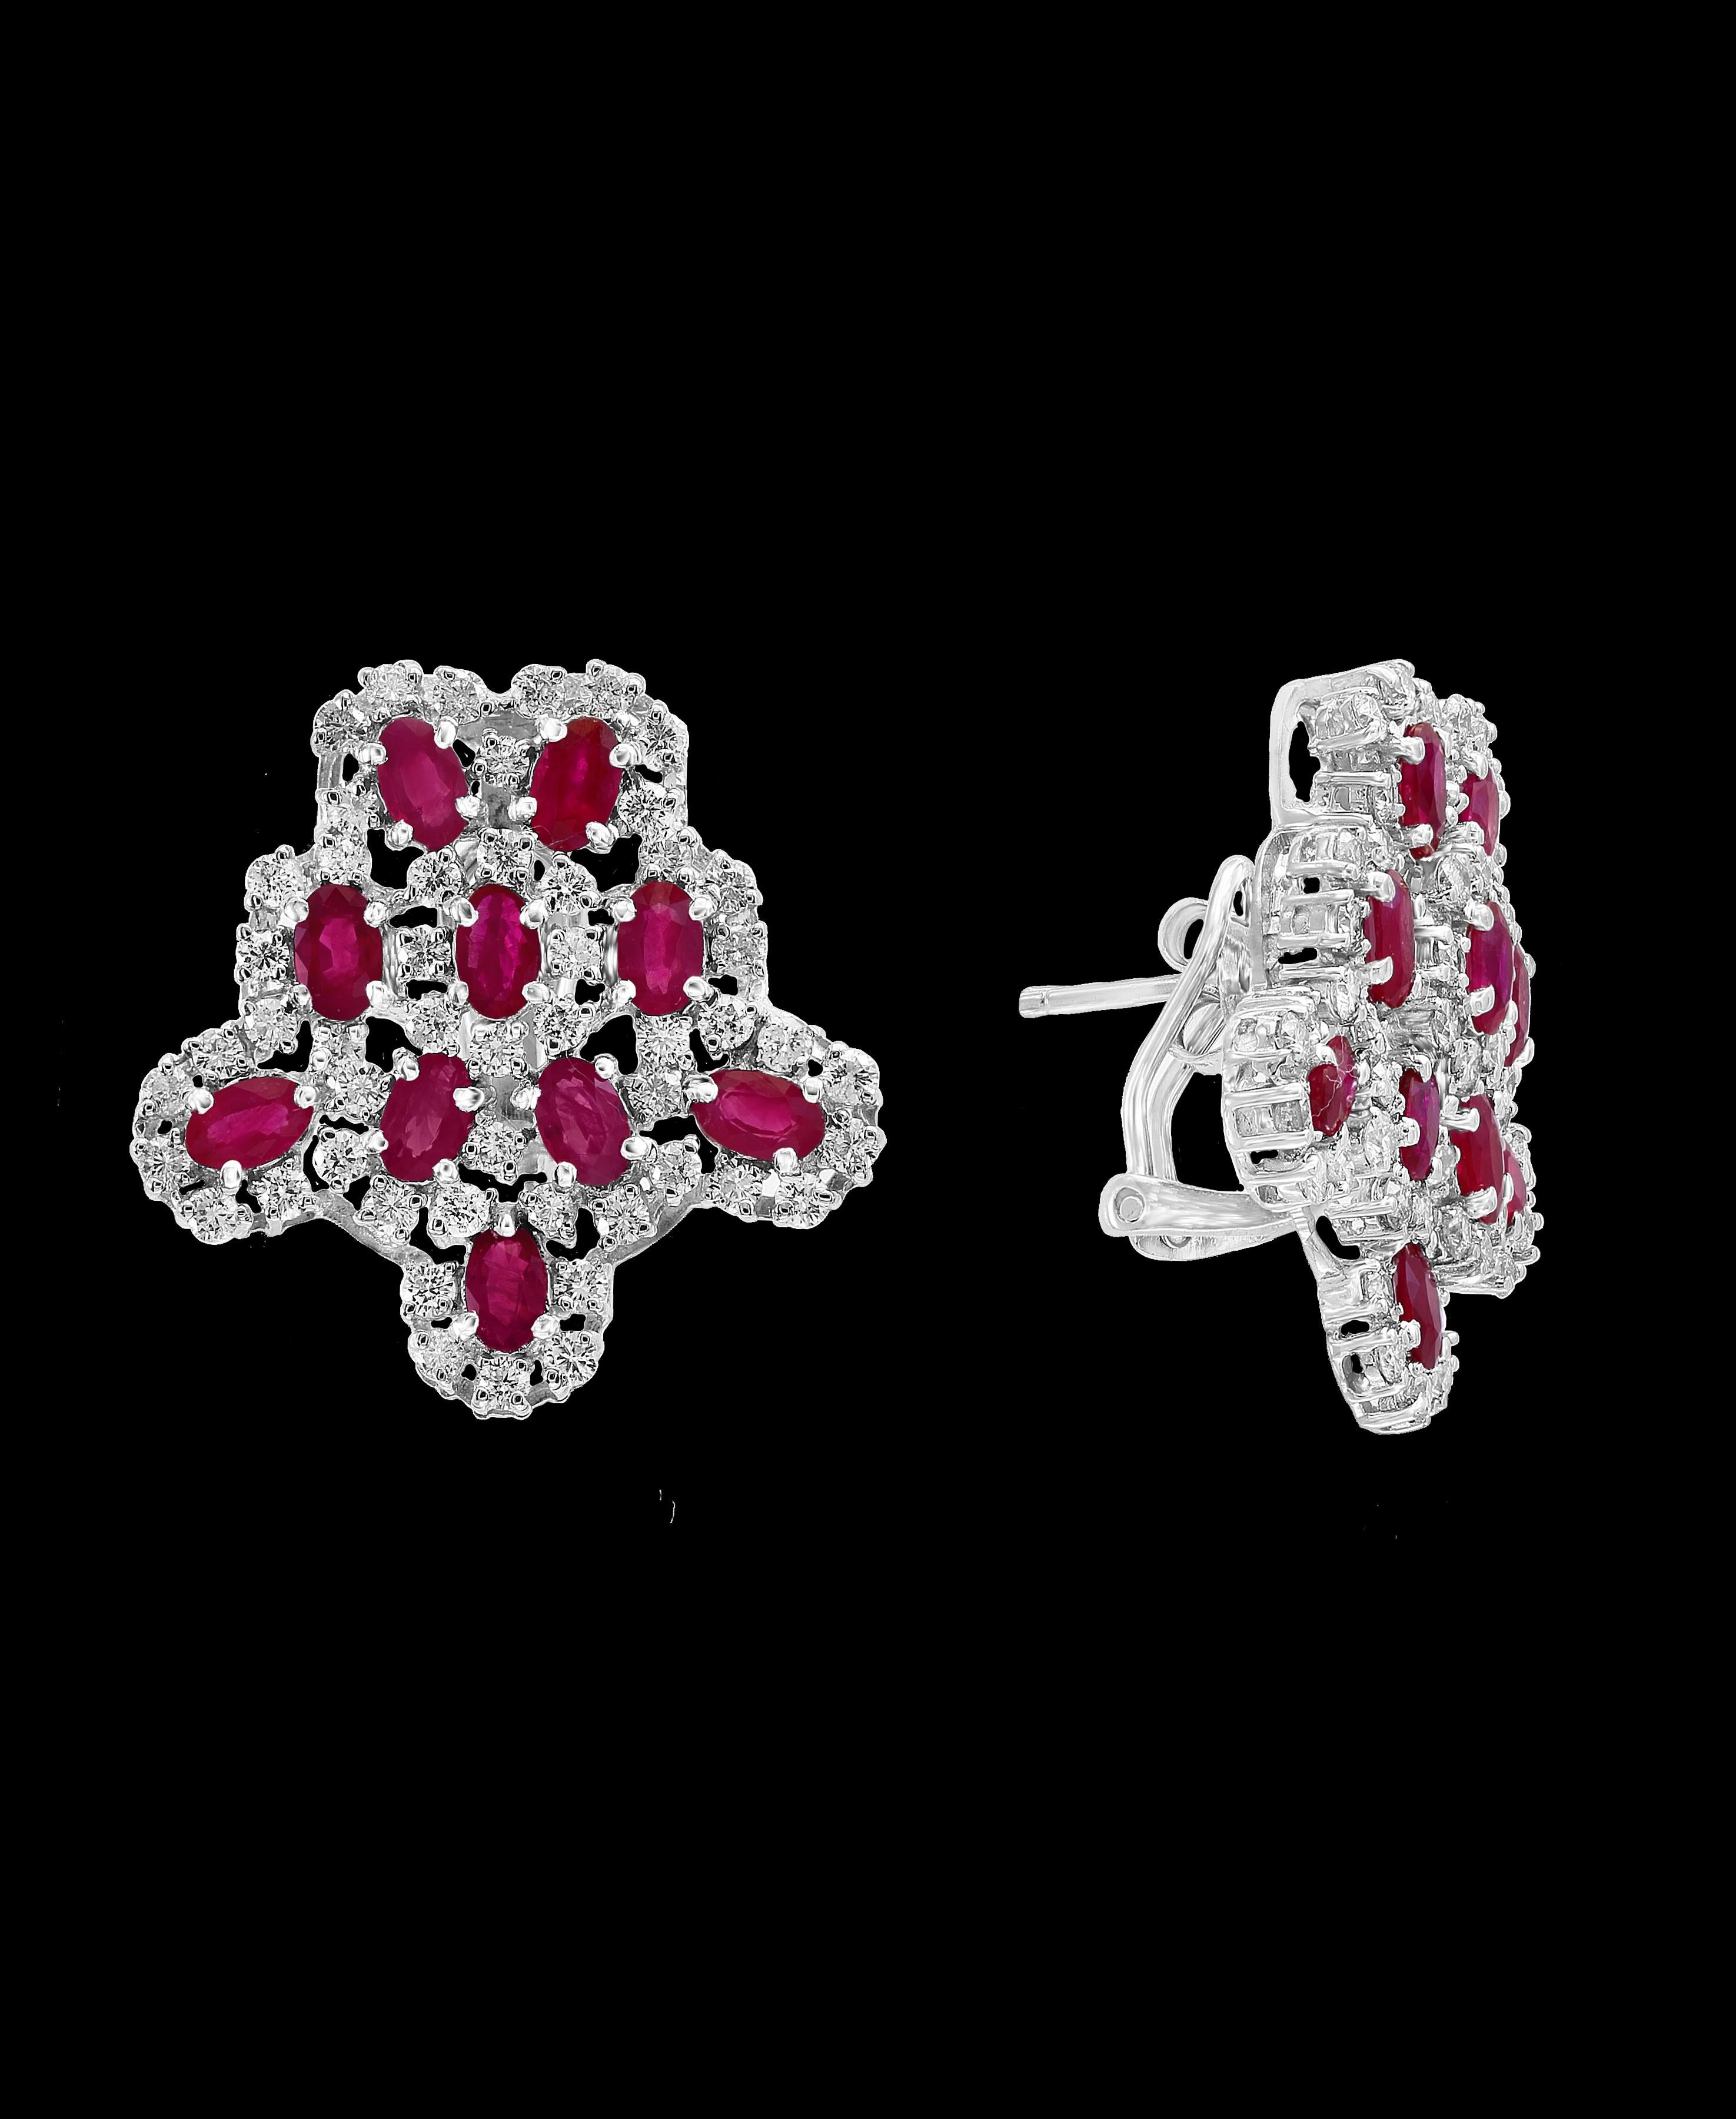 45 Carat Oval Cut Ruby and 28 Carat Diamond Necklace Suite 18 Karat Gold, Bridal For Sale 3